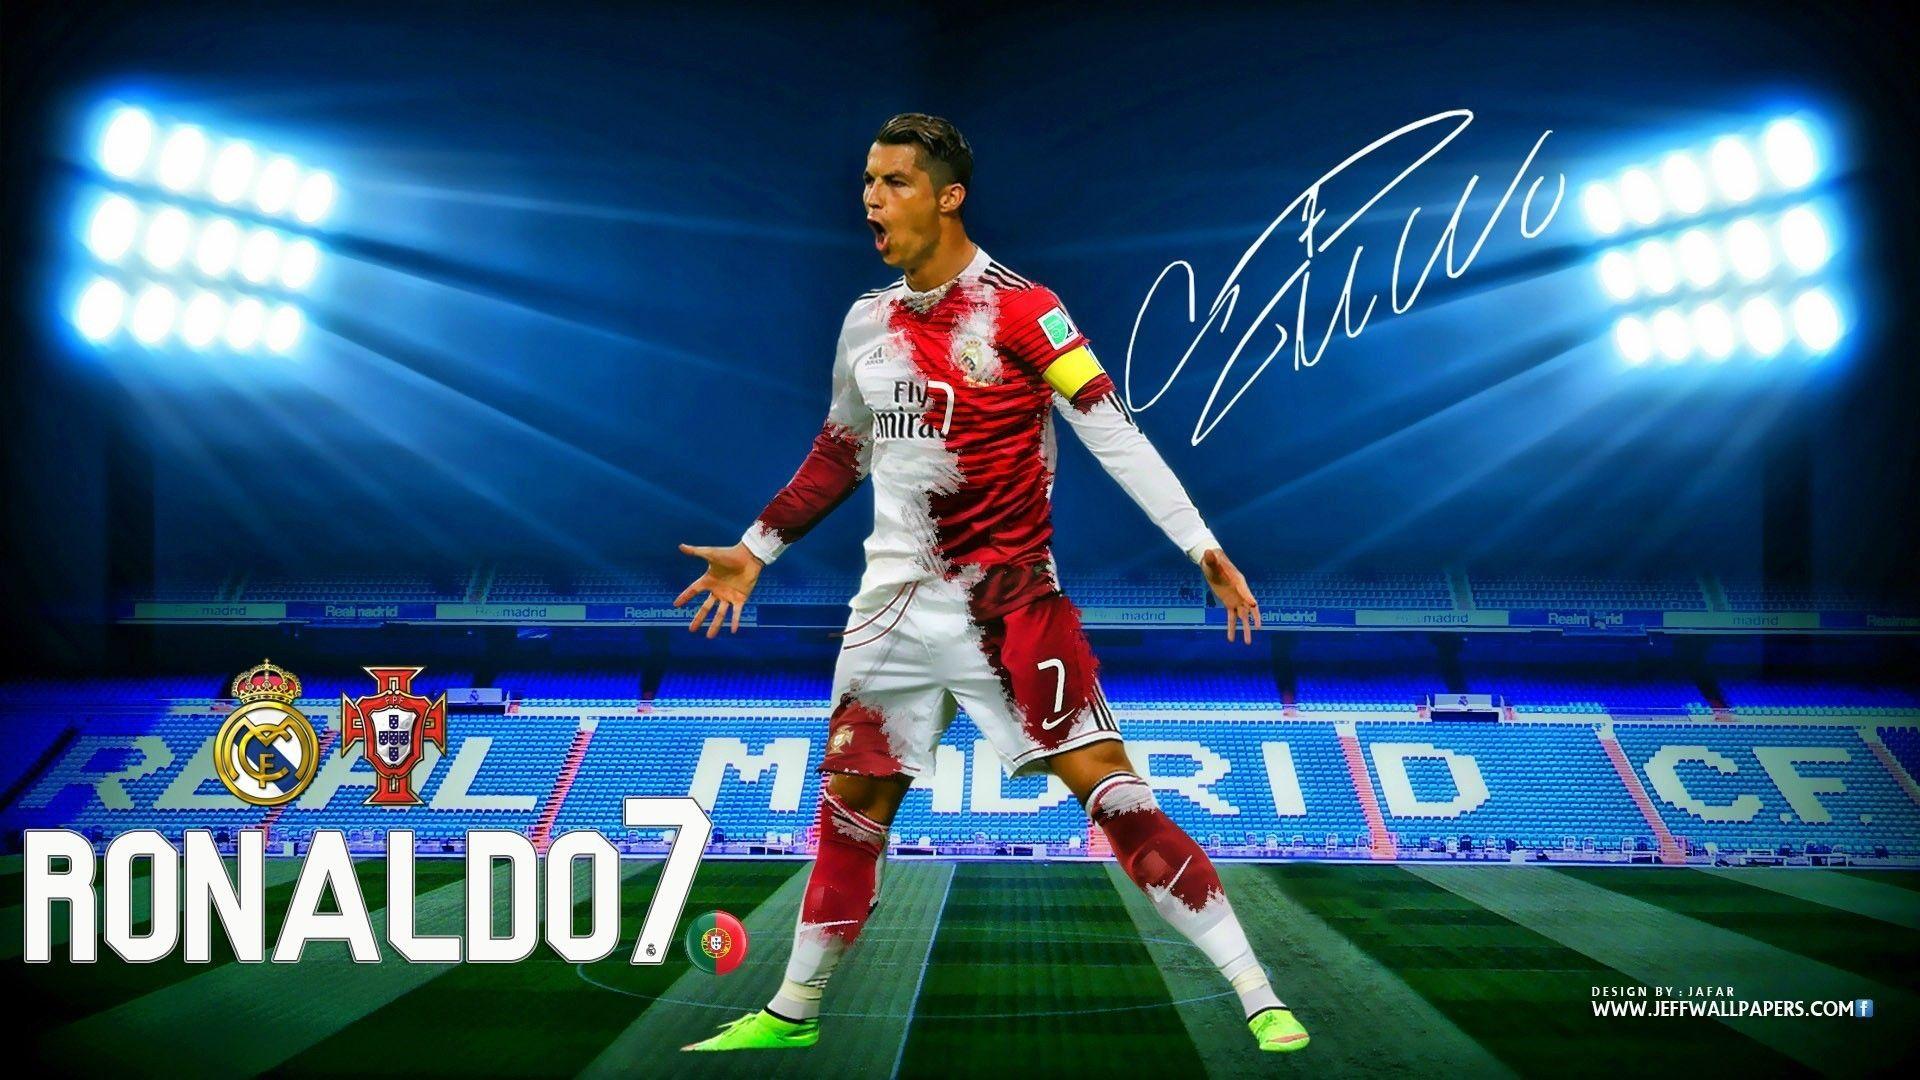 Ronaldo vs Messi Wallpaper 2018